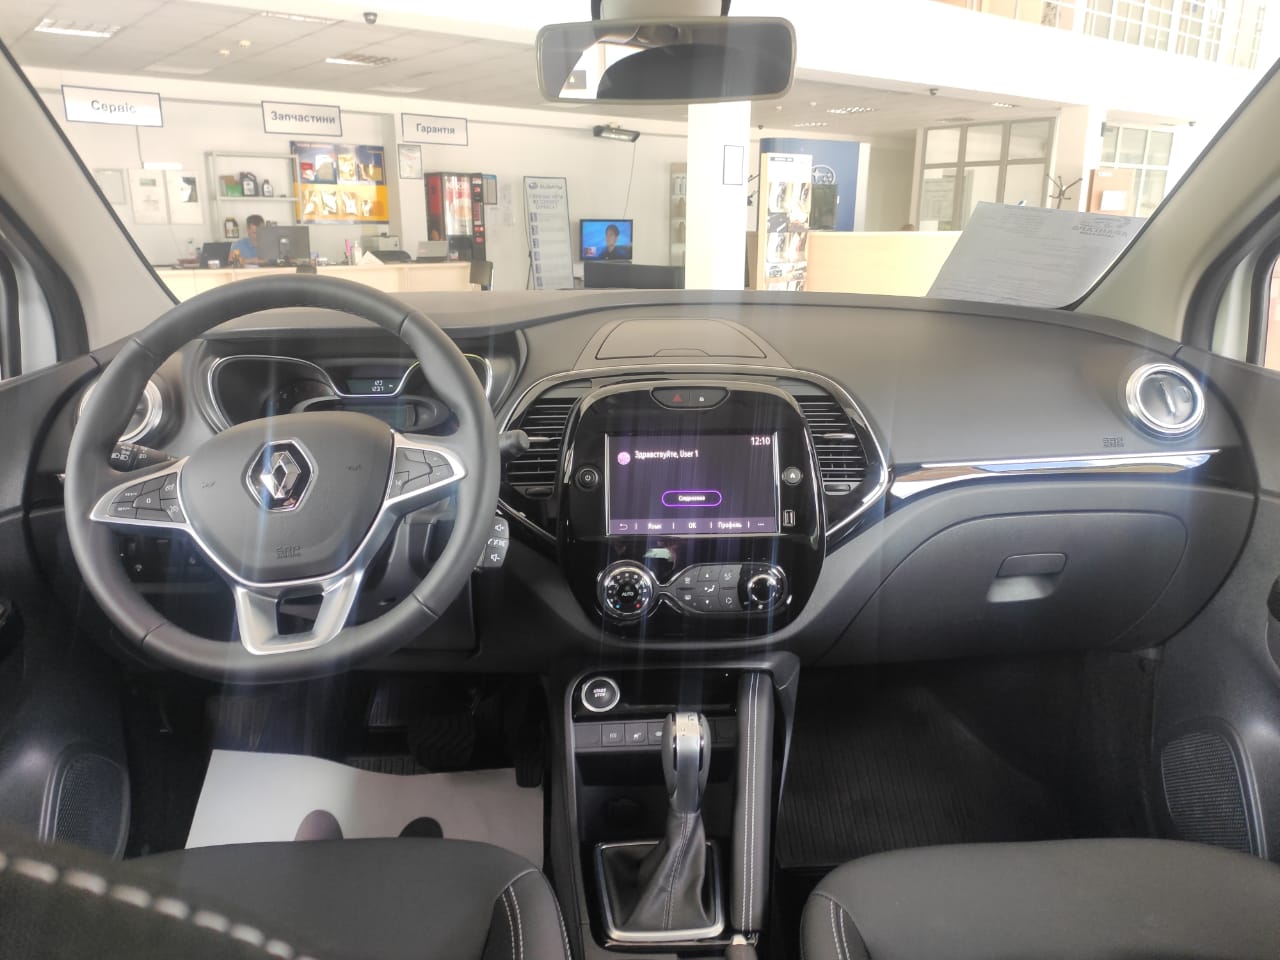 Renault KAPTUR 1.6 л., 16-кл., (114л.с.) CVT X-Tronic, 4х2. Style. Белый с черной крышей. 2021